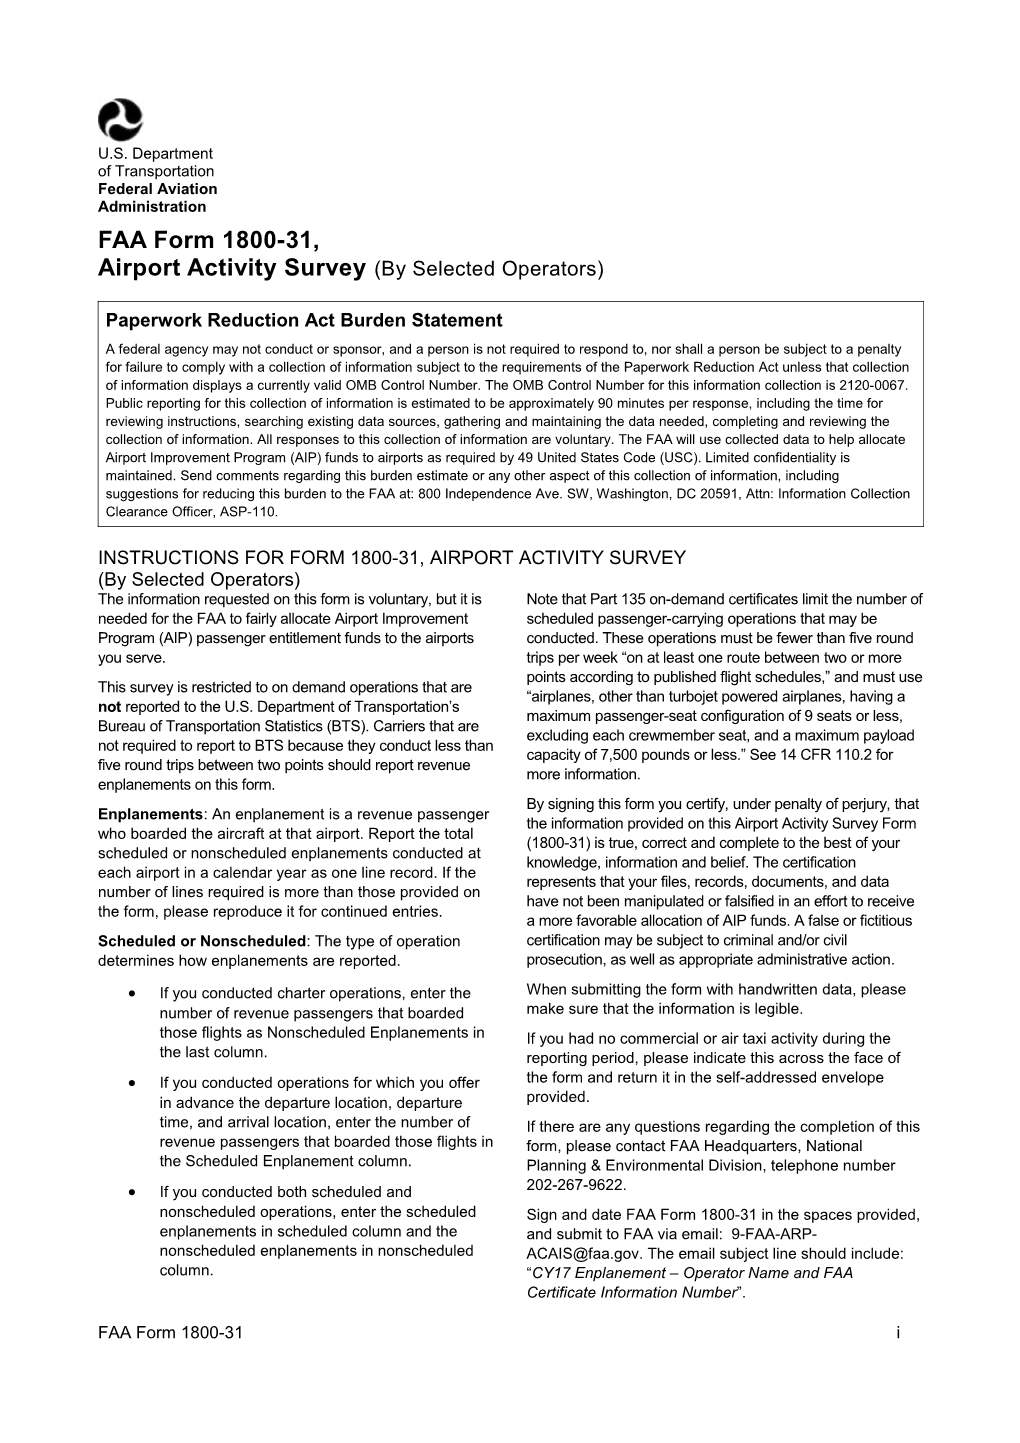 FAA Form 1800-31, Airport Activity Survey